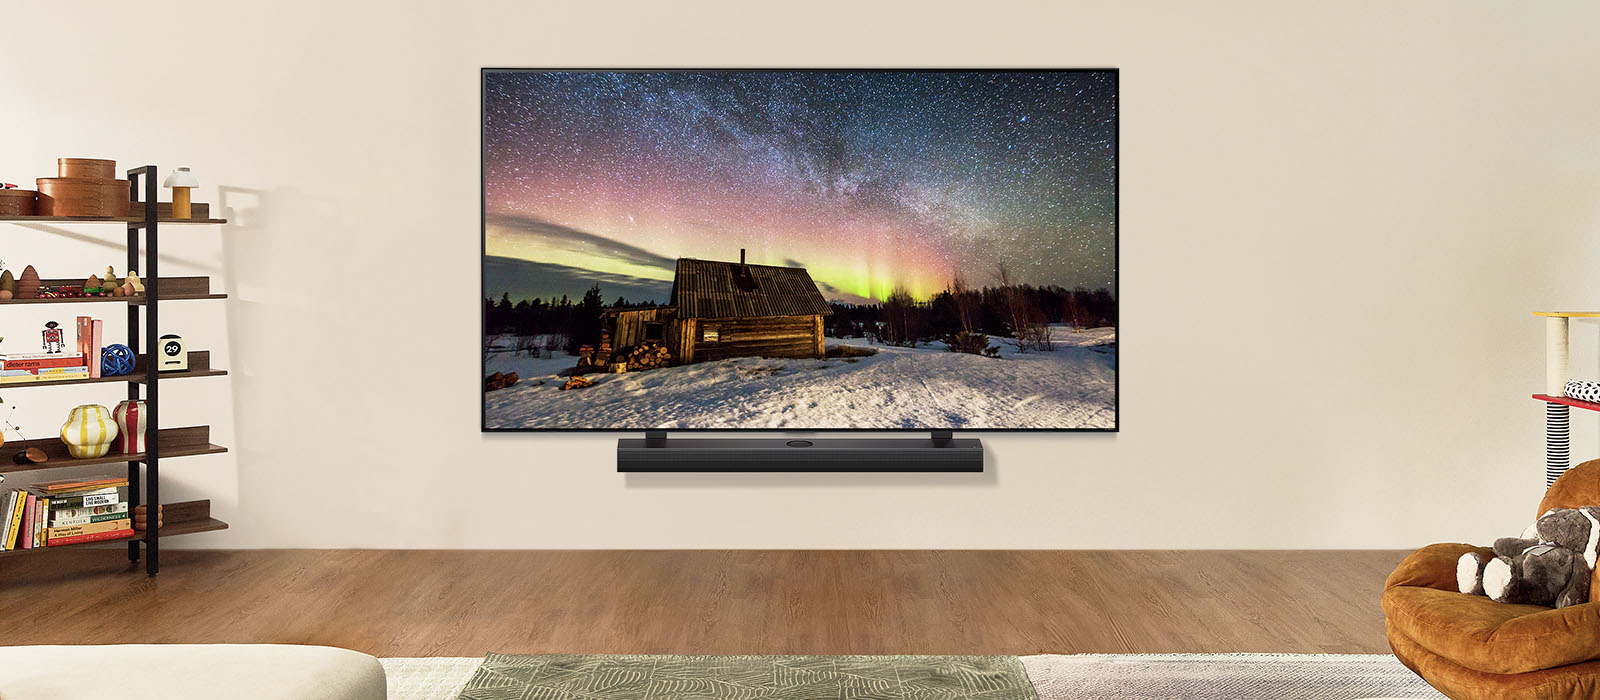 Slika LG televizora i LG Soundbar zvučnika u modernom životnom prostoru po danu. Slika polarne svetlosti prikazana je na idealnom nivou osvetljenosti.